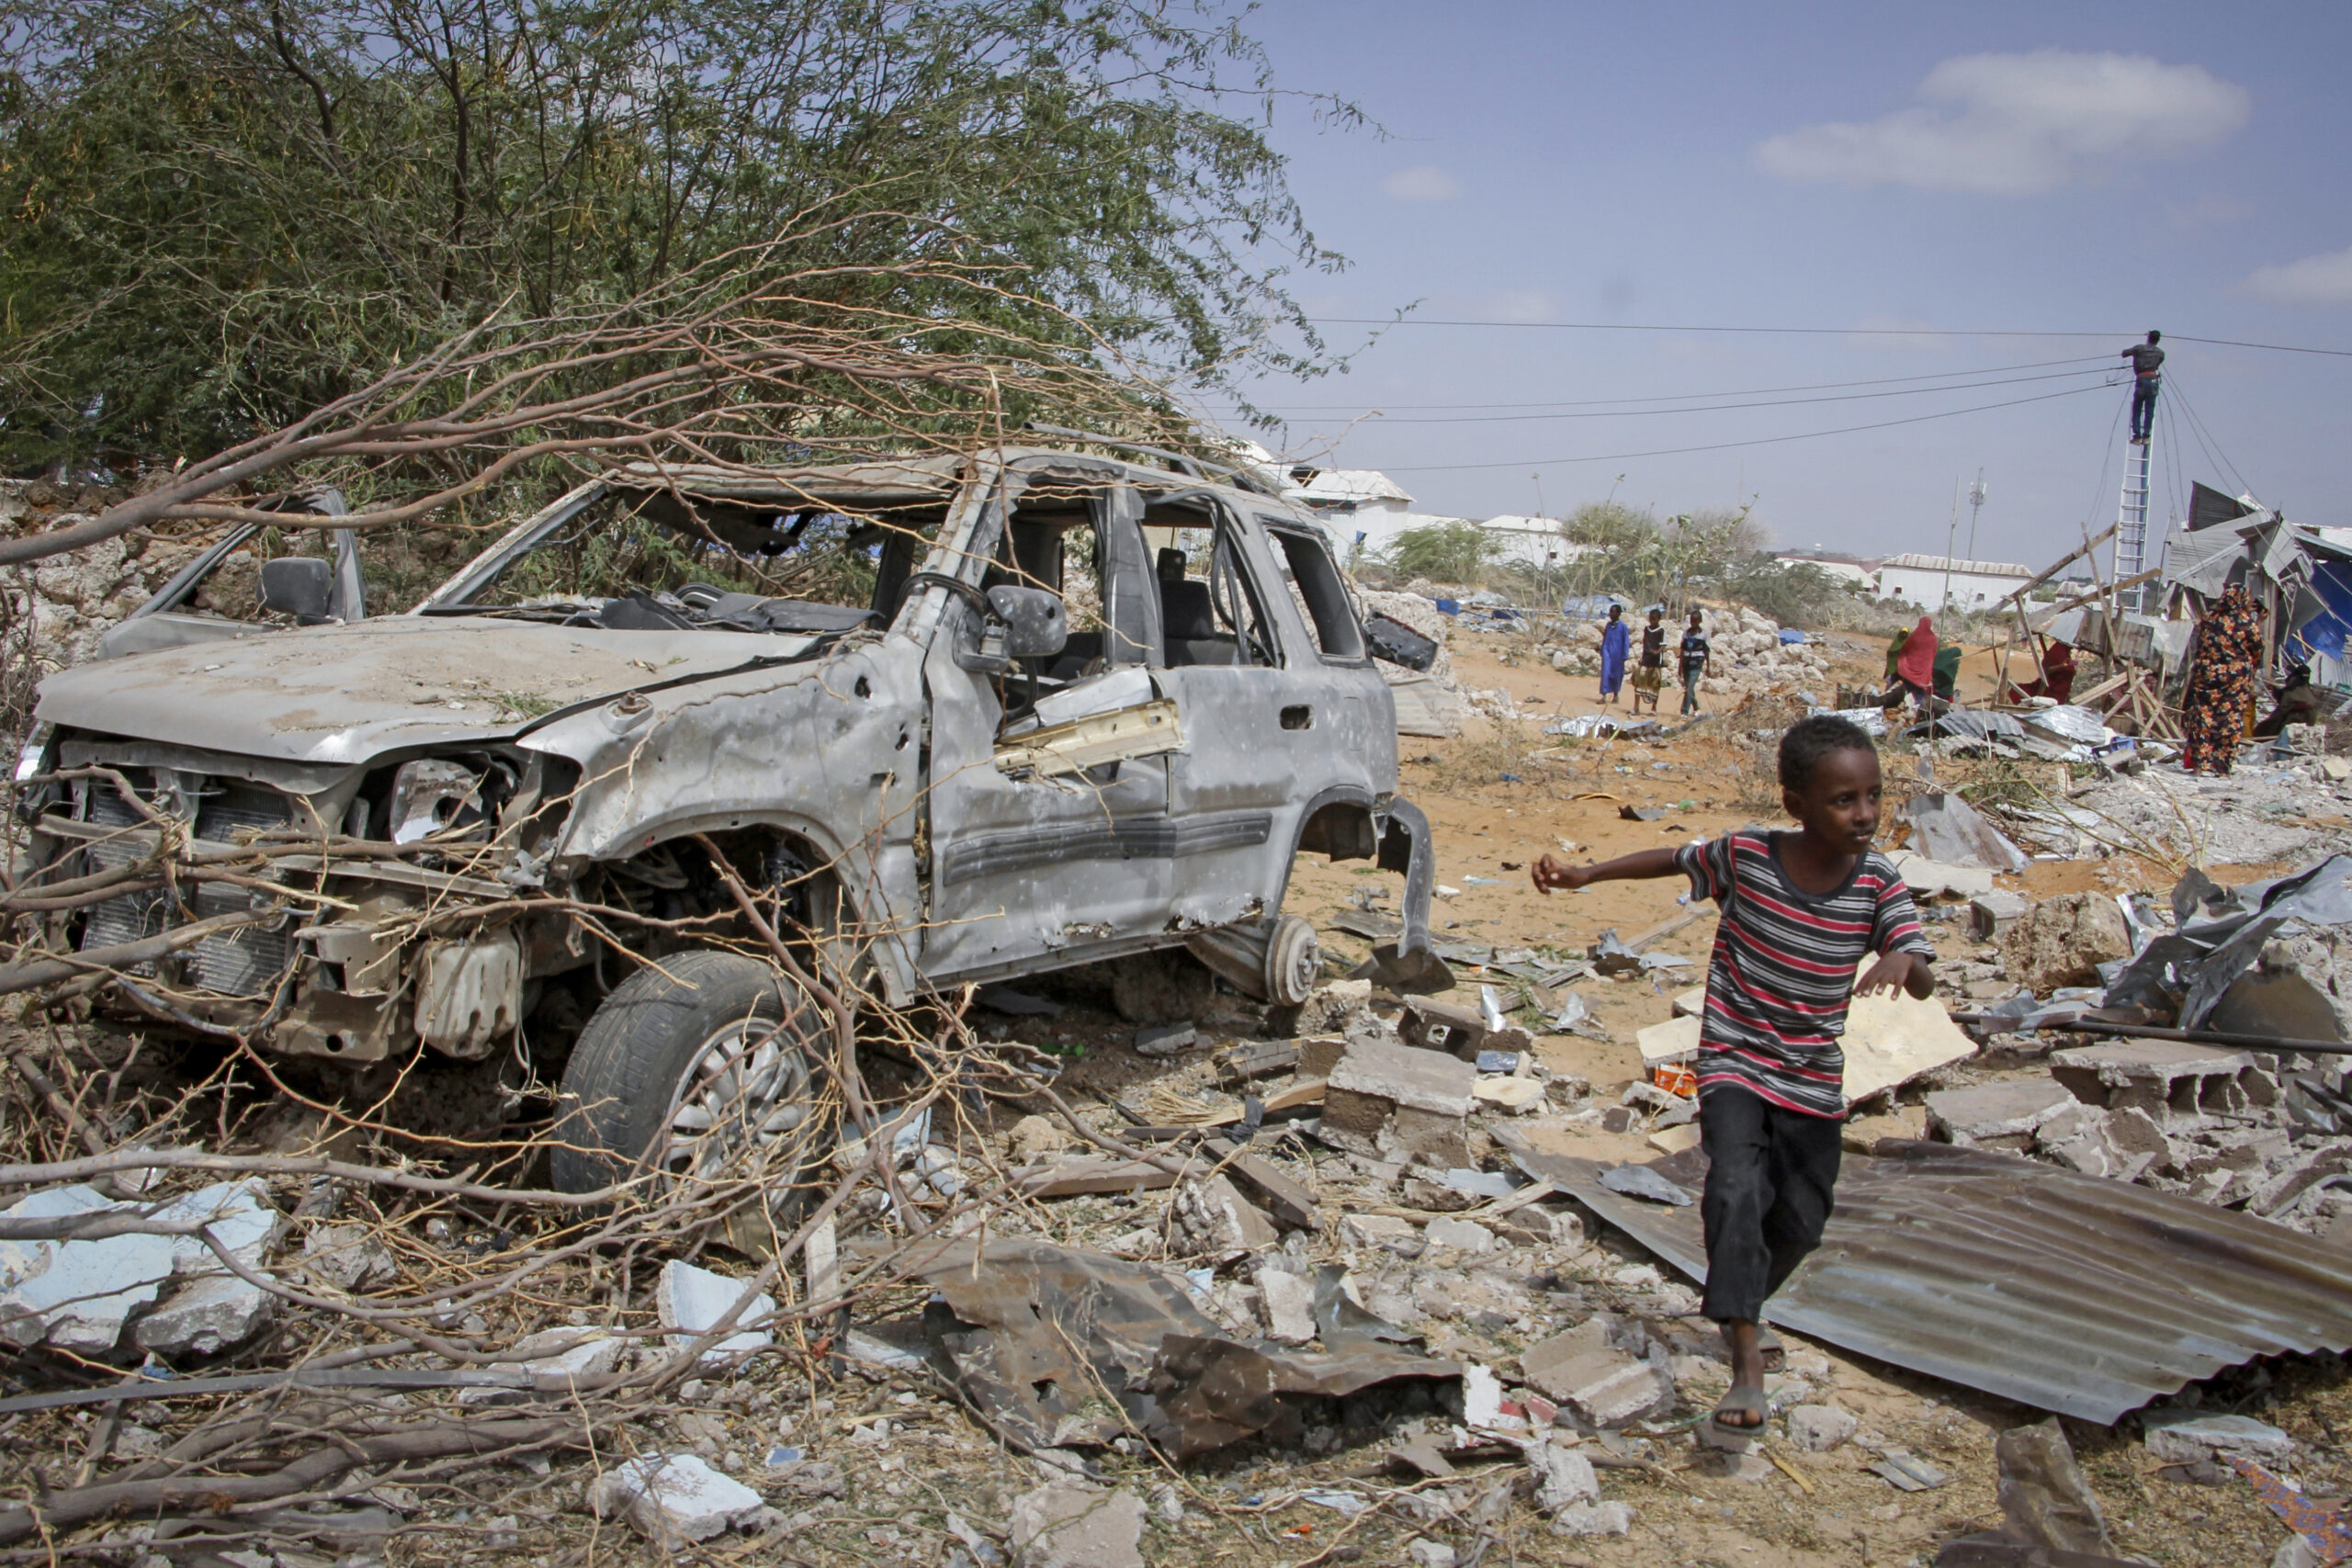 Thirteen killed, 18 wounded in suicide blast at Somali restaurant - Washington Examiner